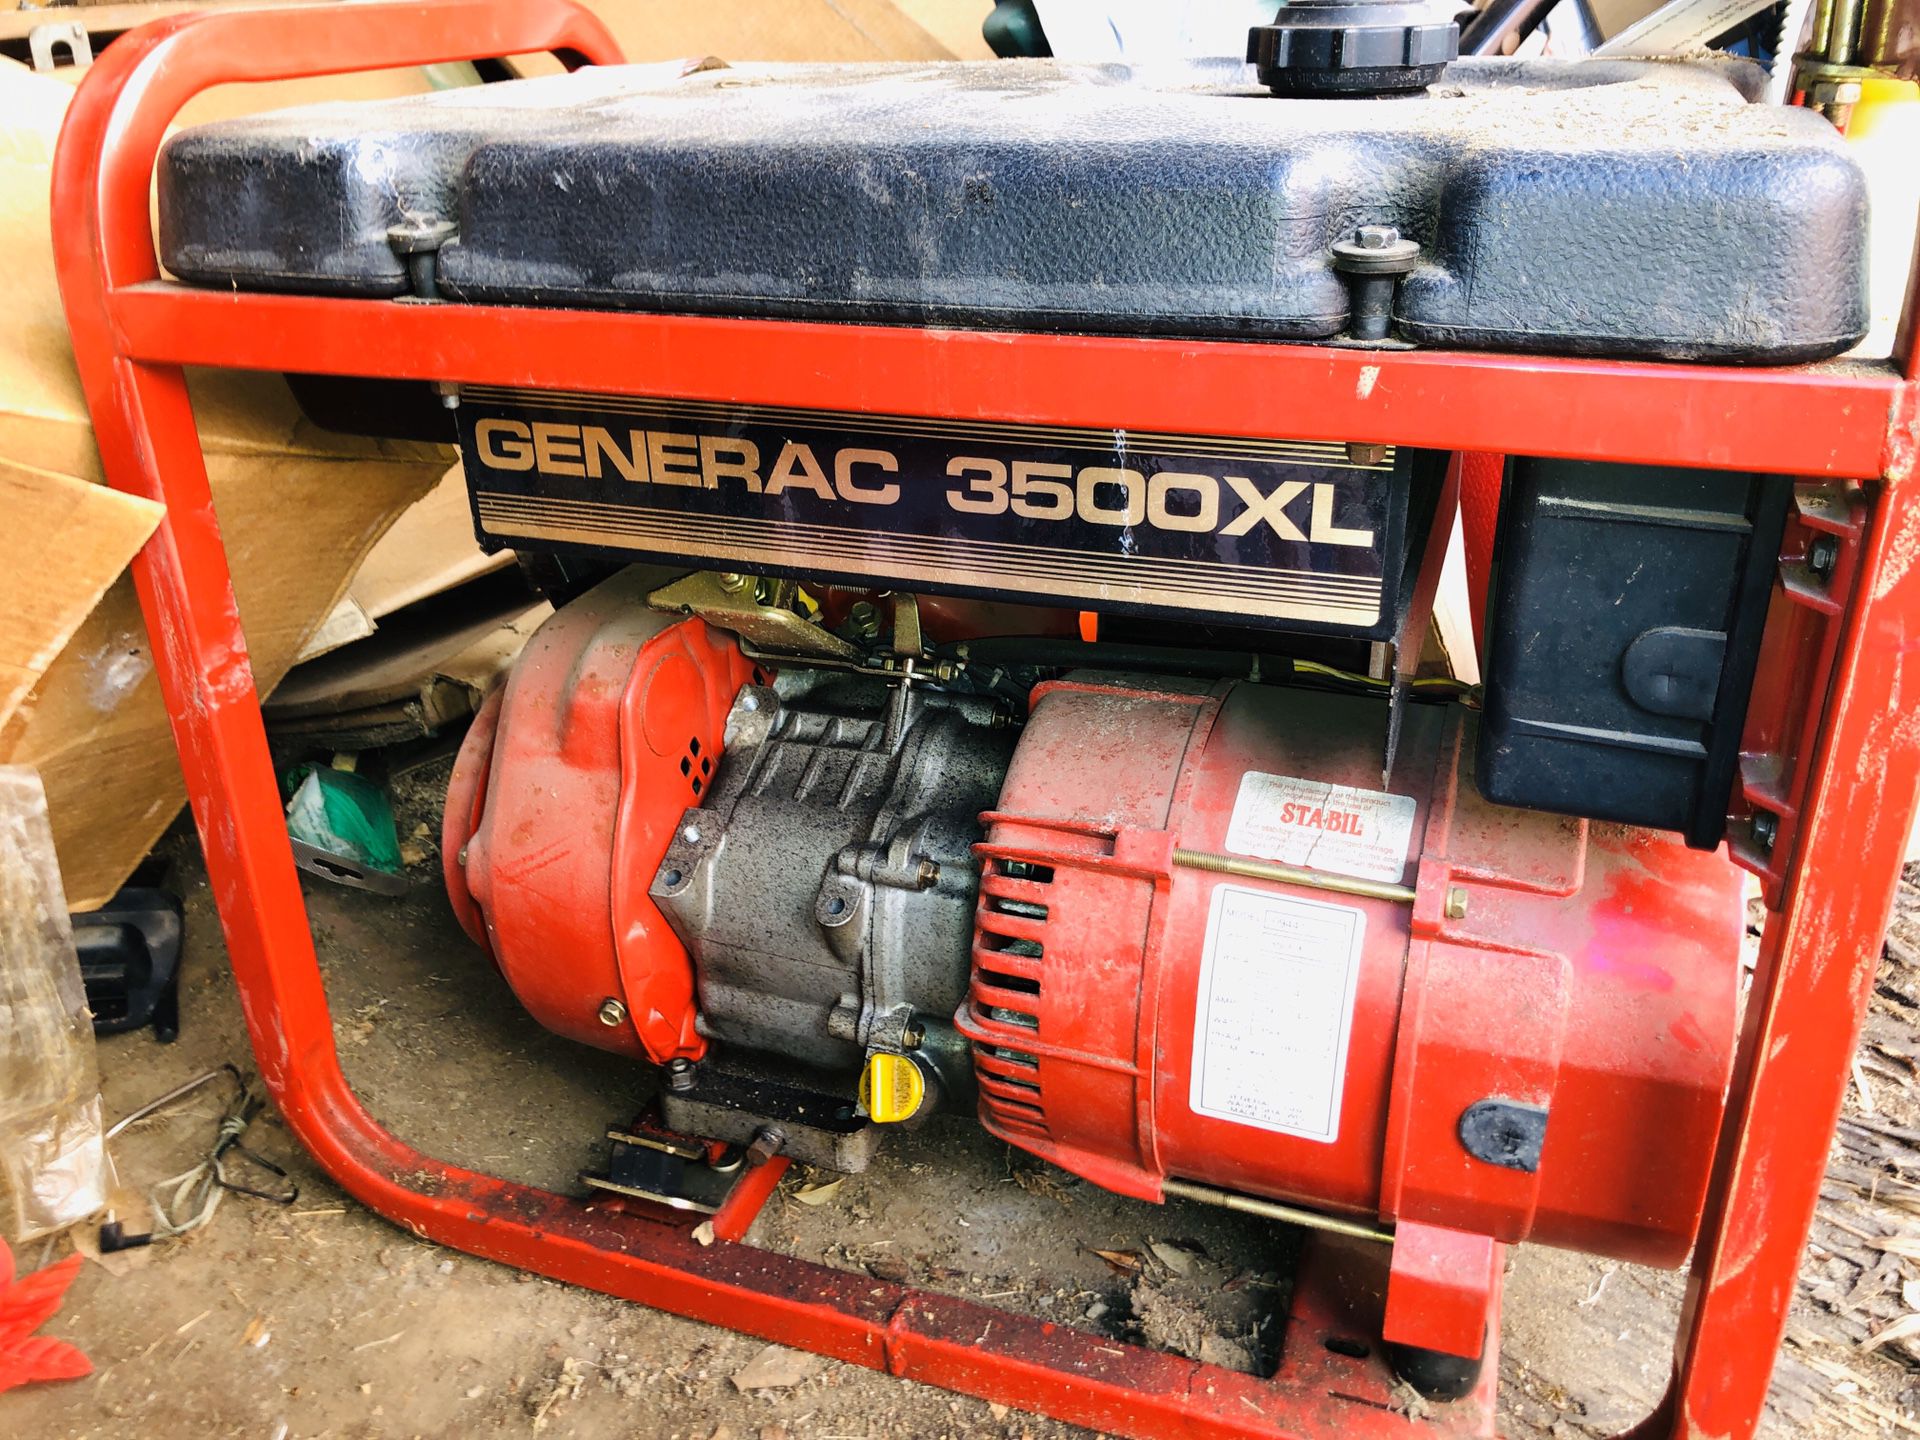 Generac 3500XL generator